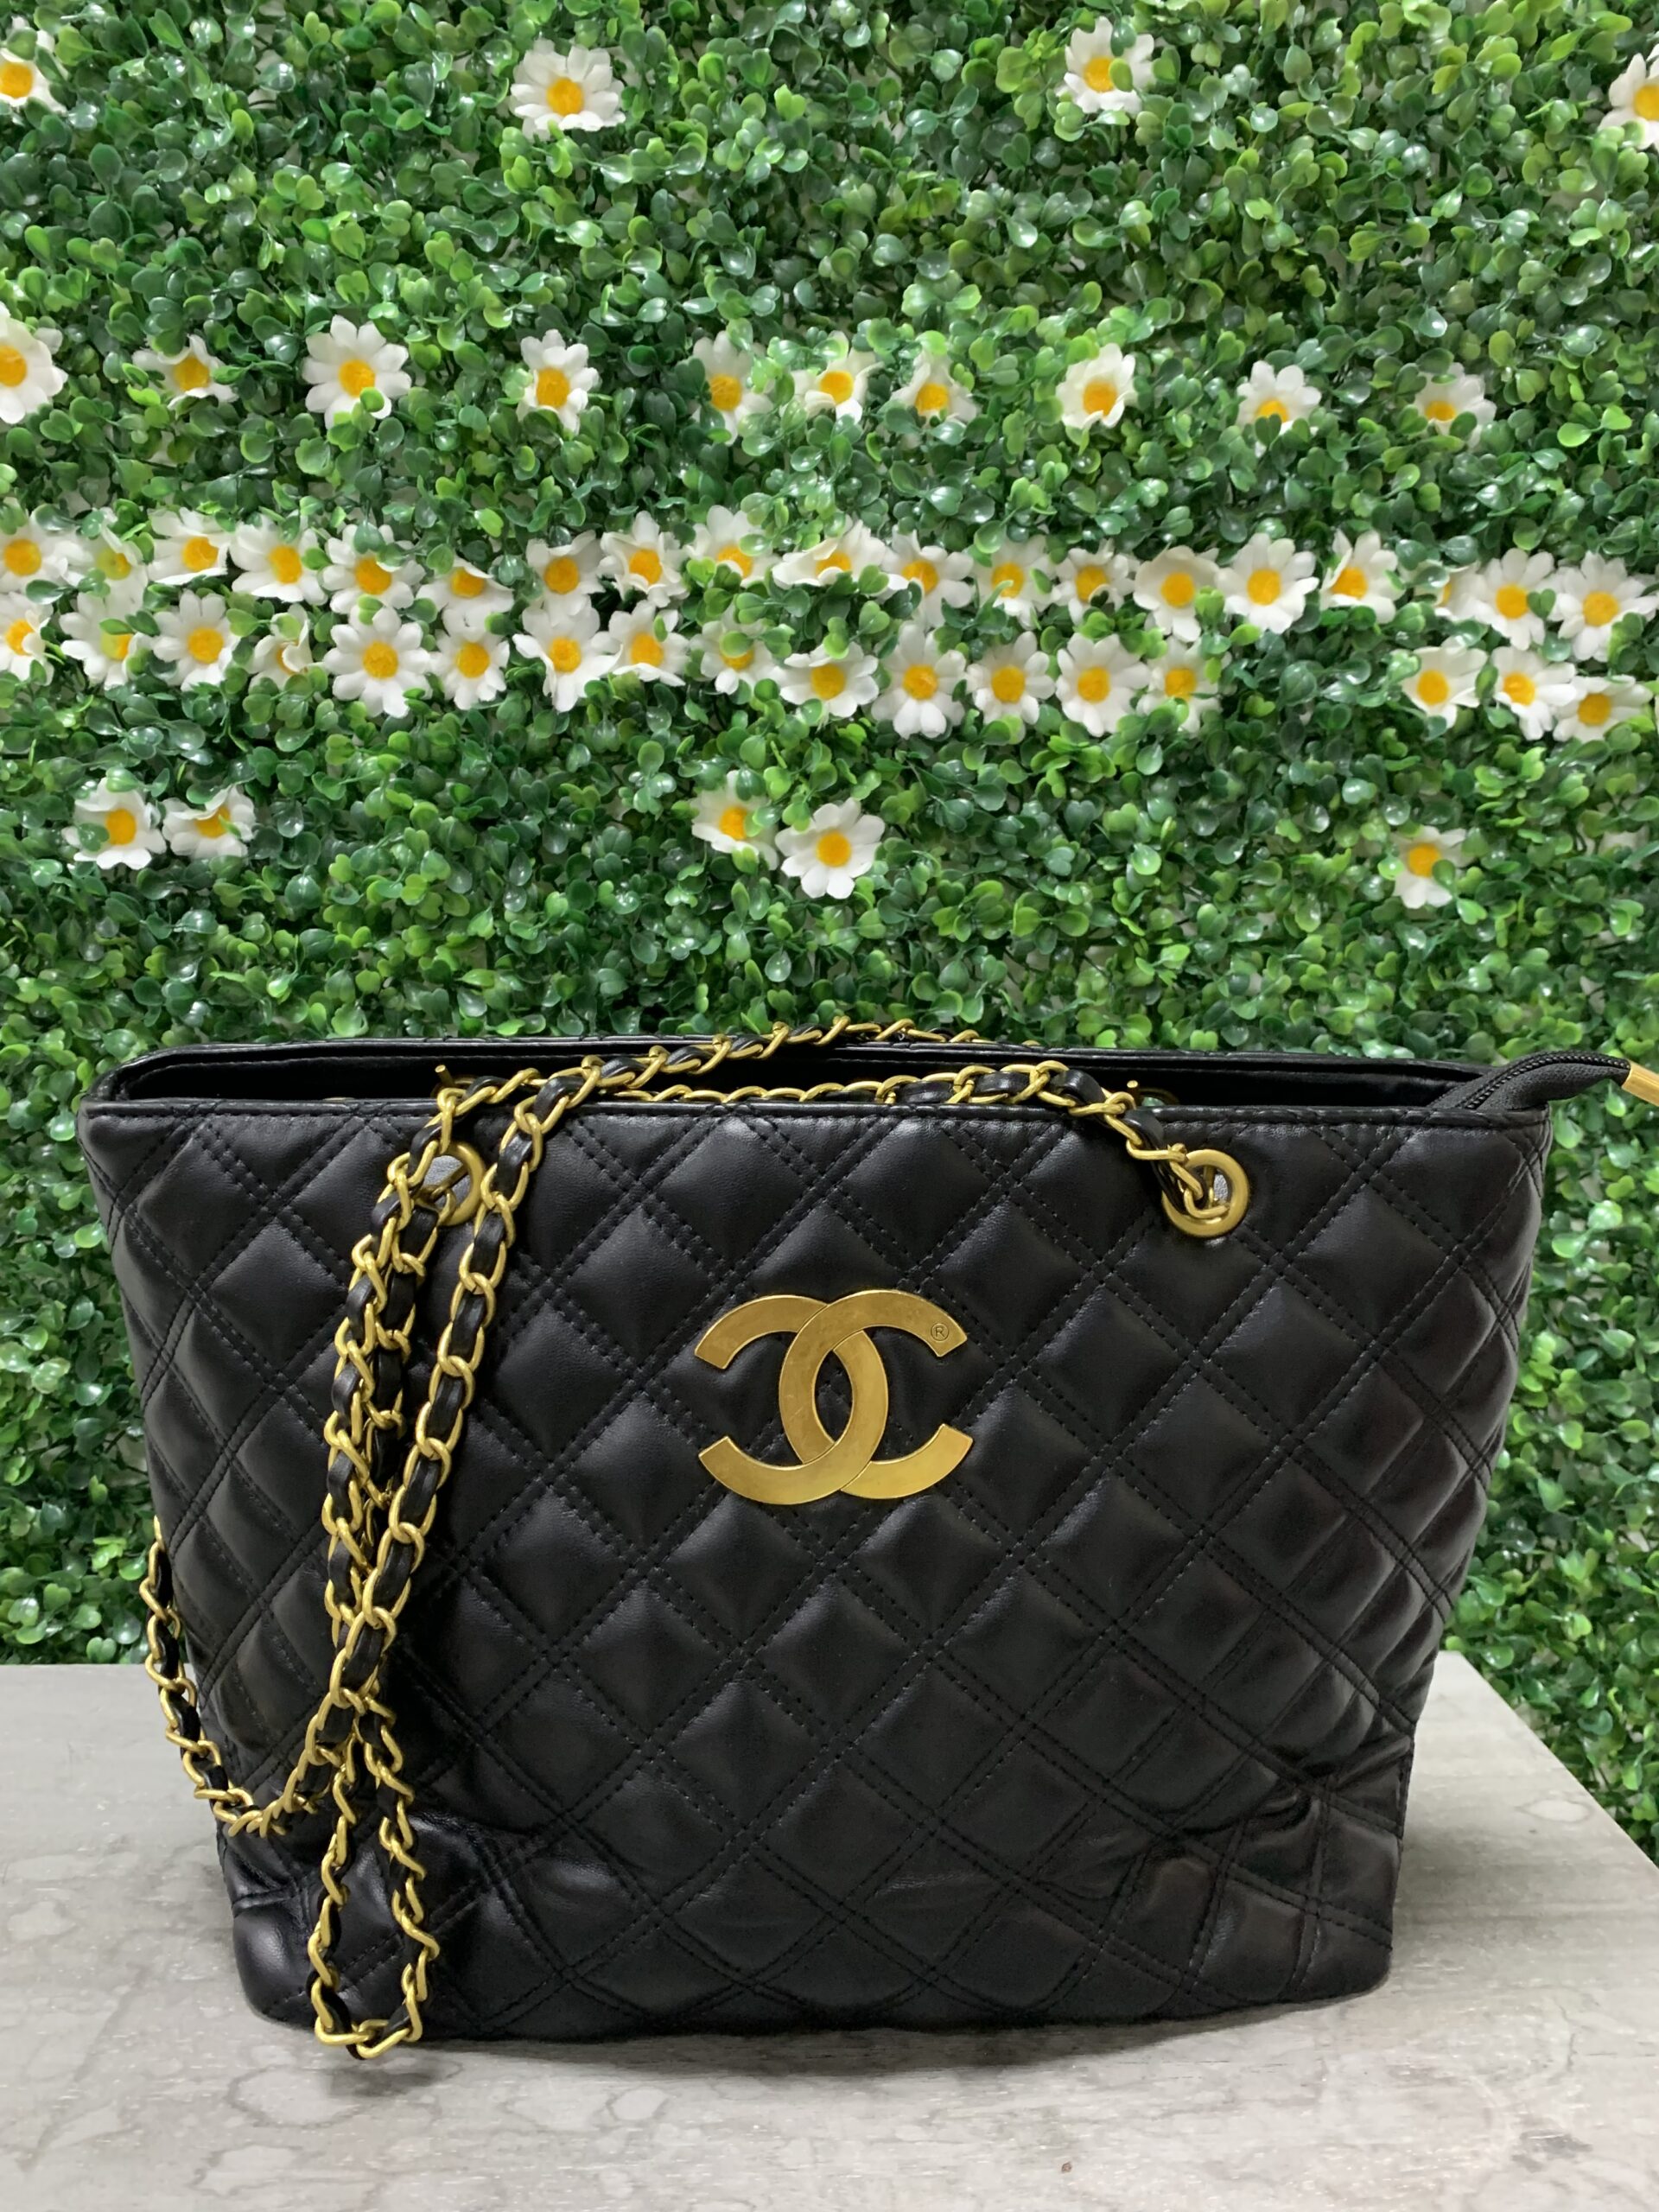 Civic Chanel Black Bag